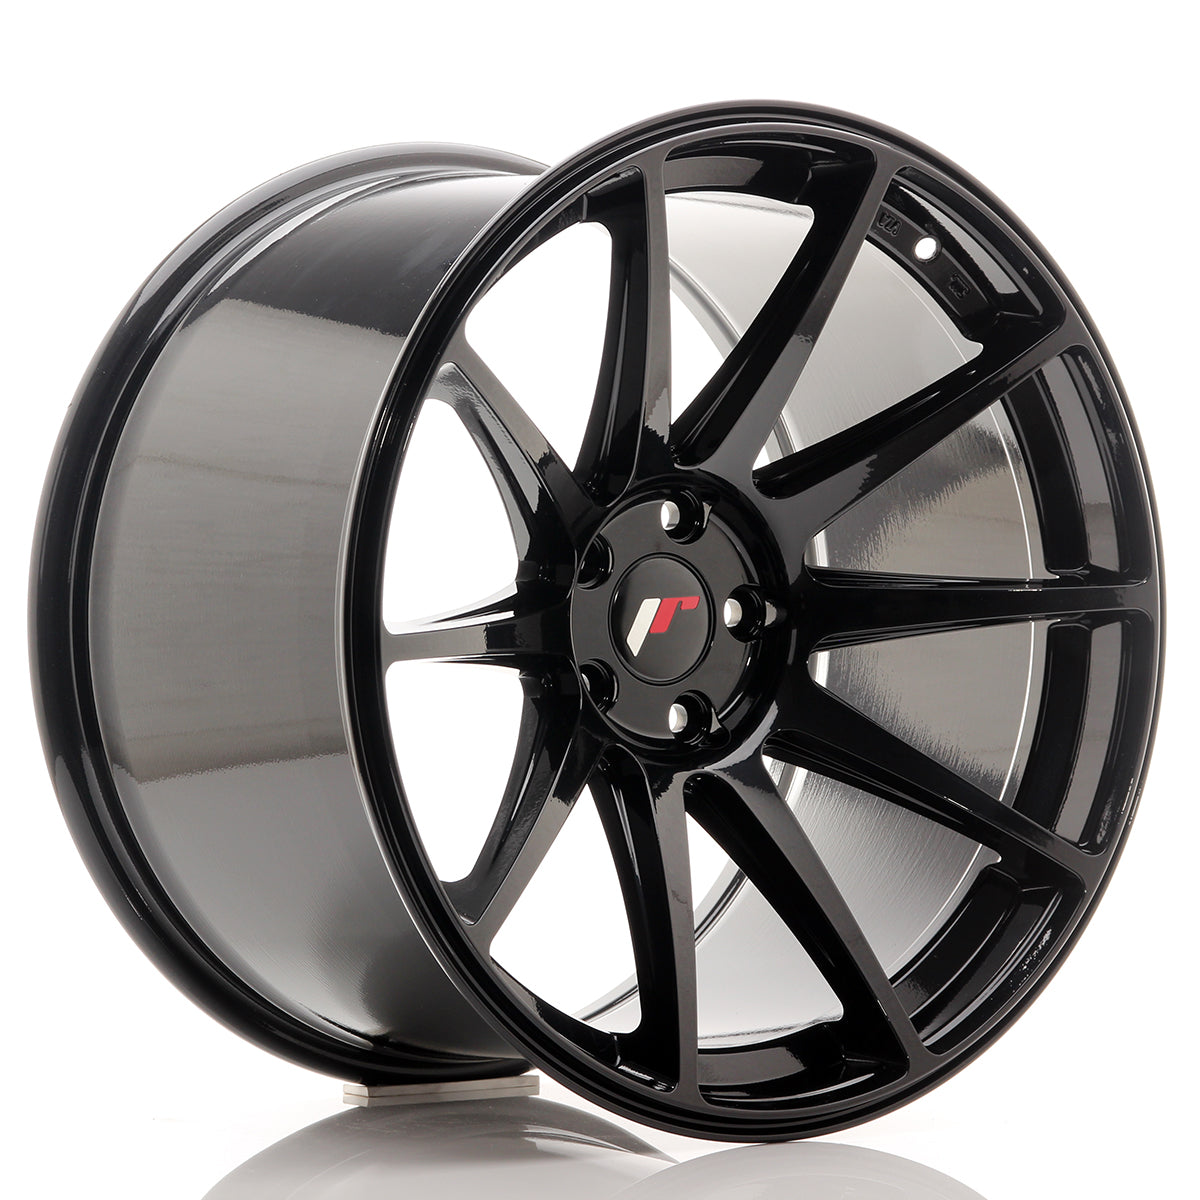 JR Wheels JR11 19x11 ET25 5x112 Glossy Black